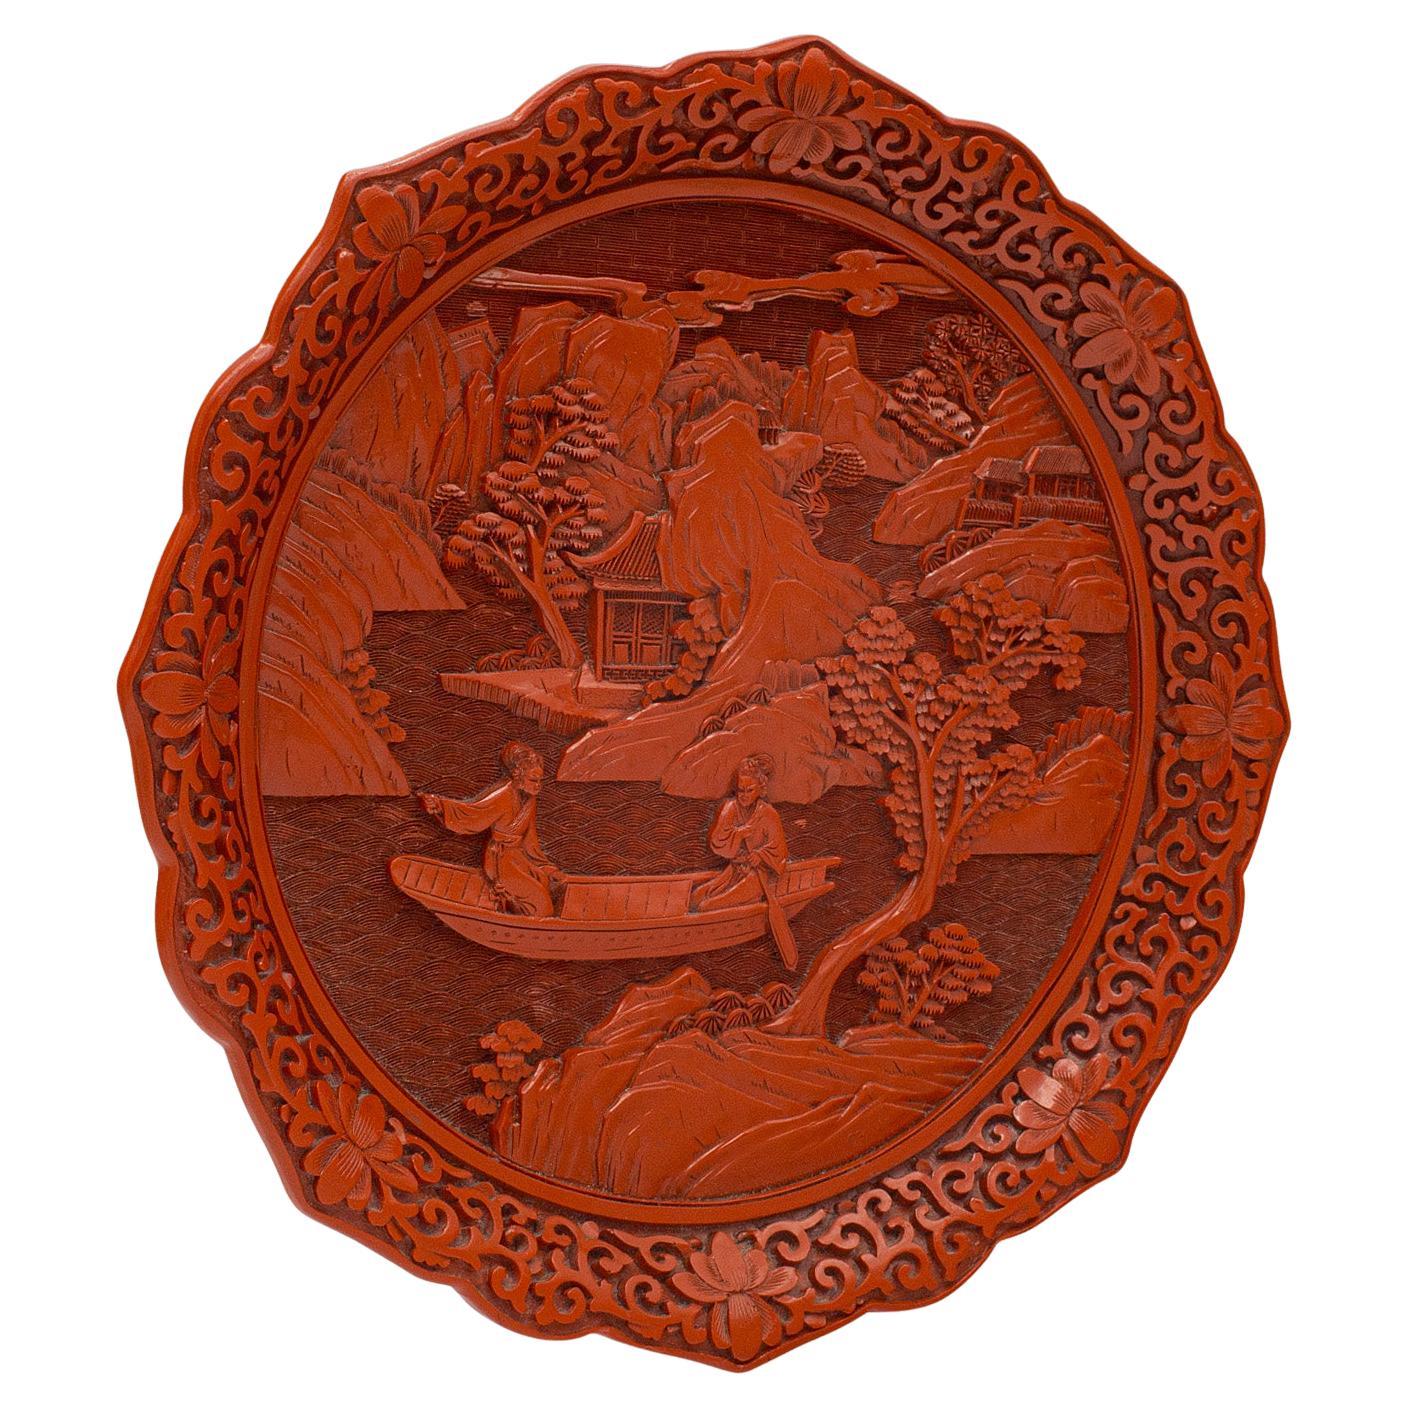 Vintage Cinnabar Display Plate, Chinese, Decorative Serving Dish, Oriental Taste